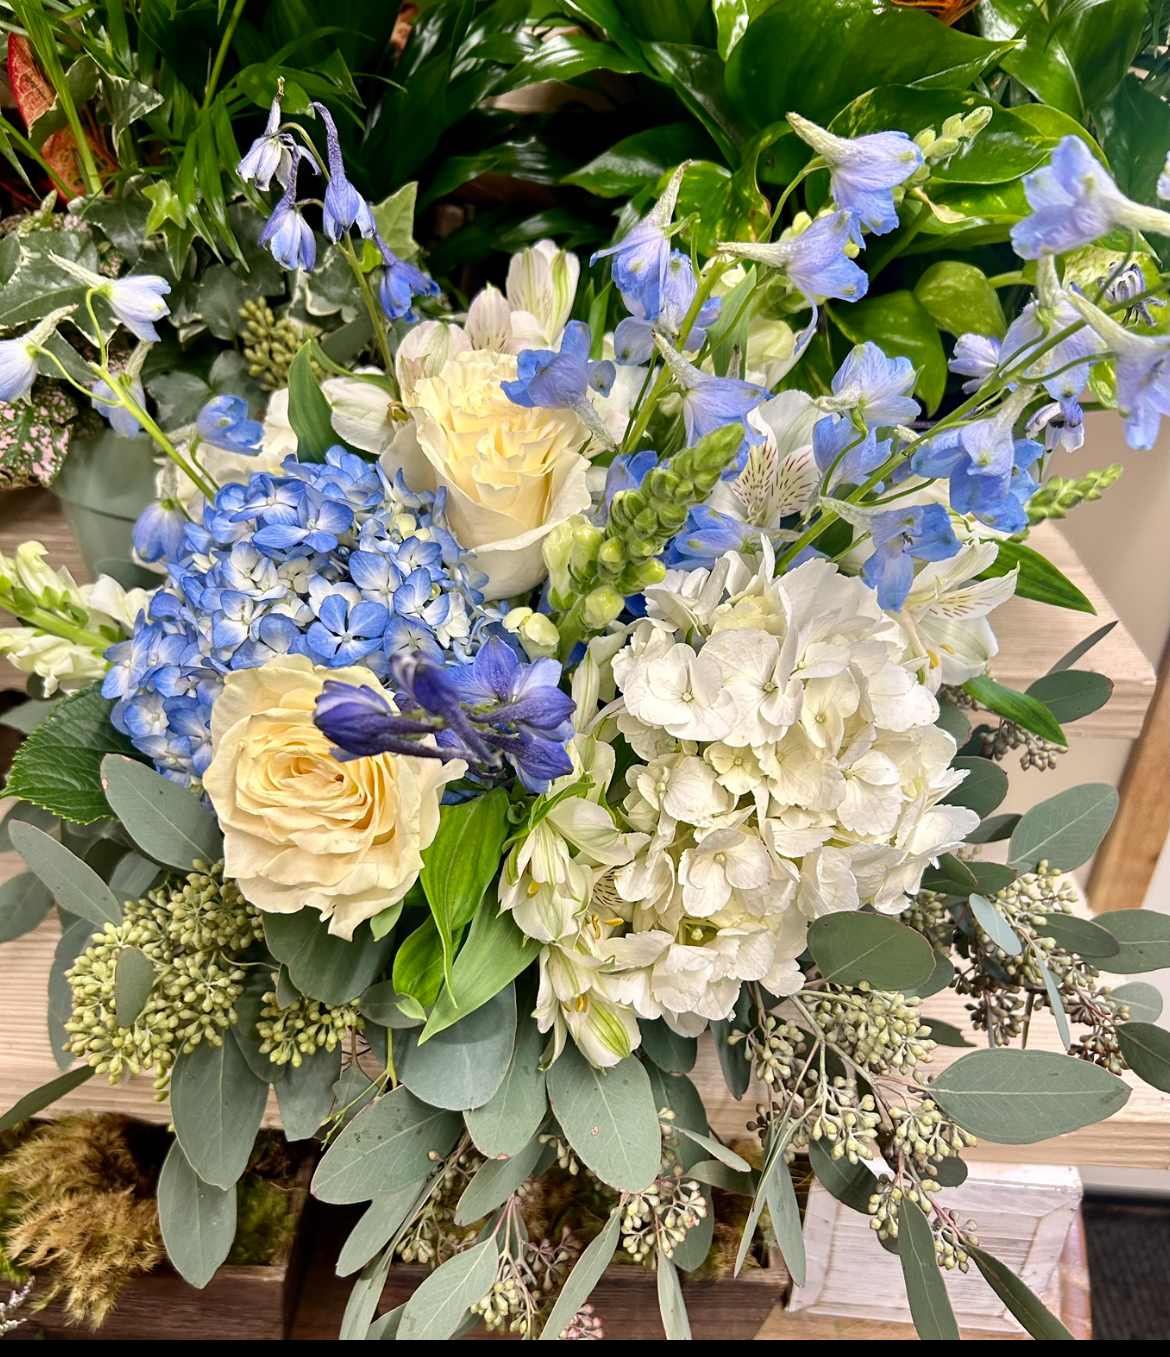 Blue sky vase arrangement - Hydrangeas, Delphinium, roses, and eucalyptus all blues and whites